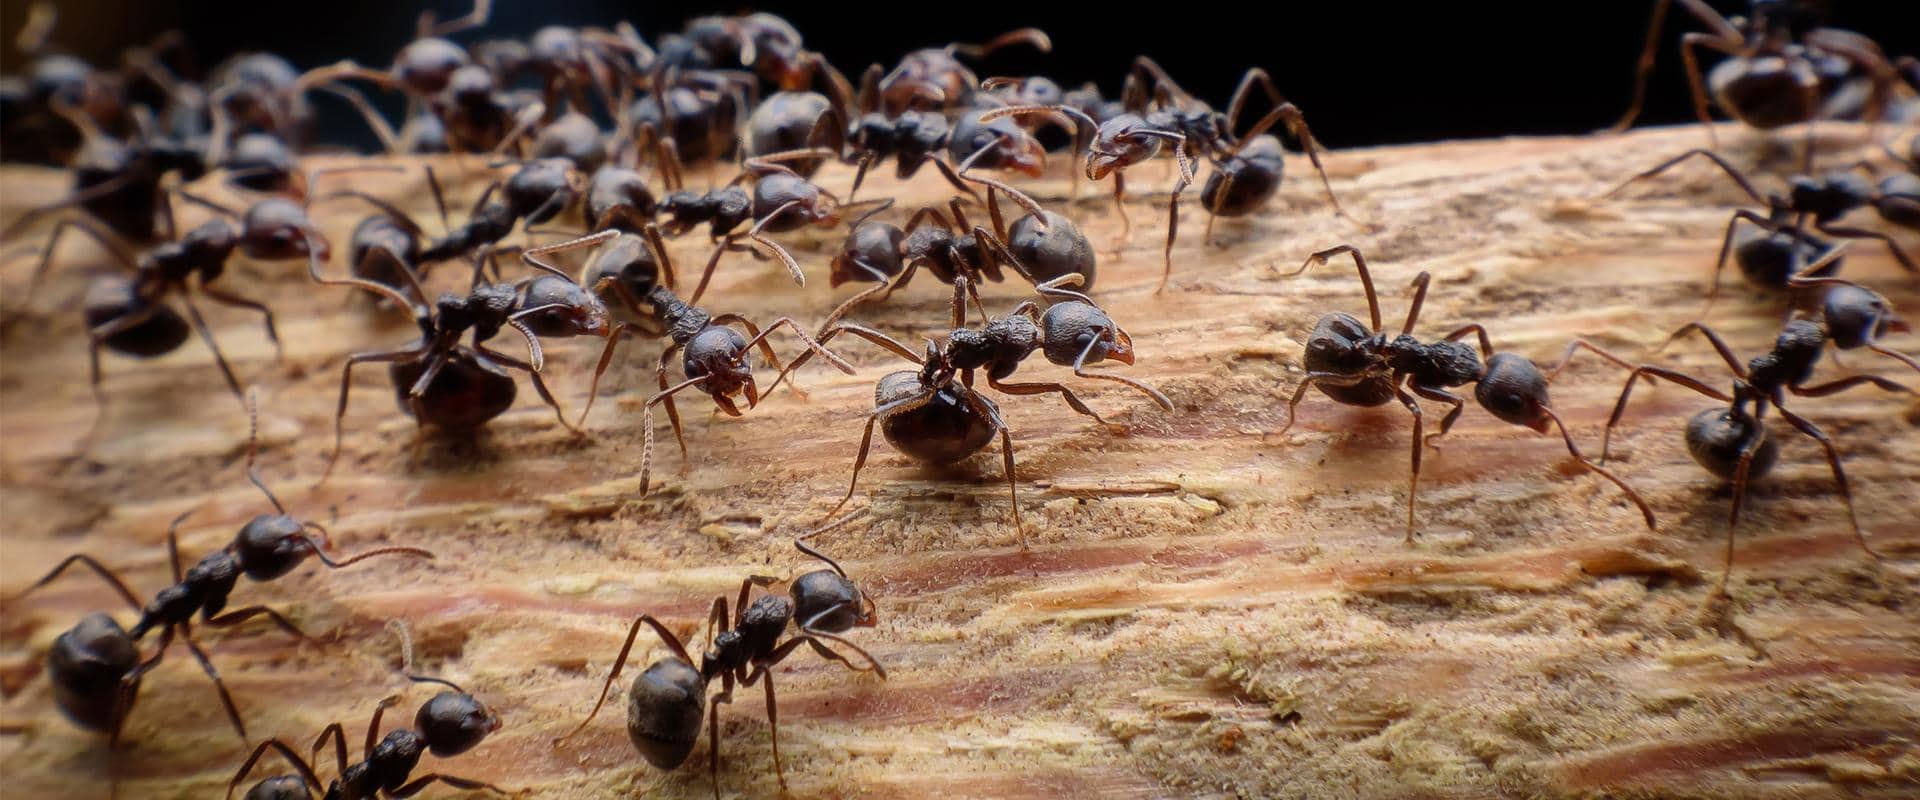 ants foraging in ellensburg wa